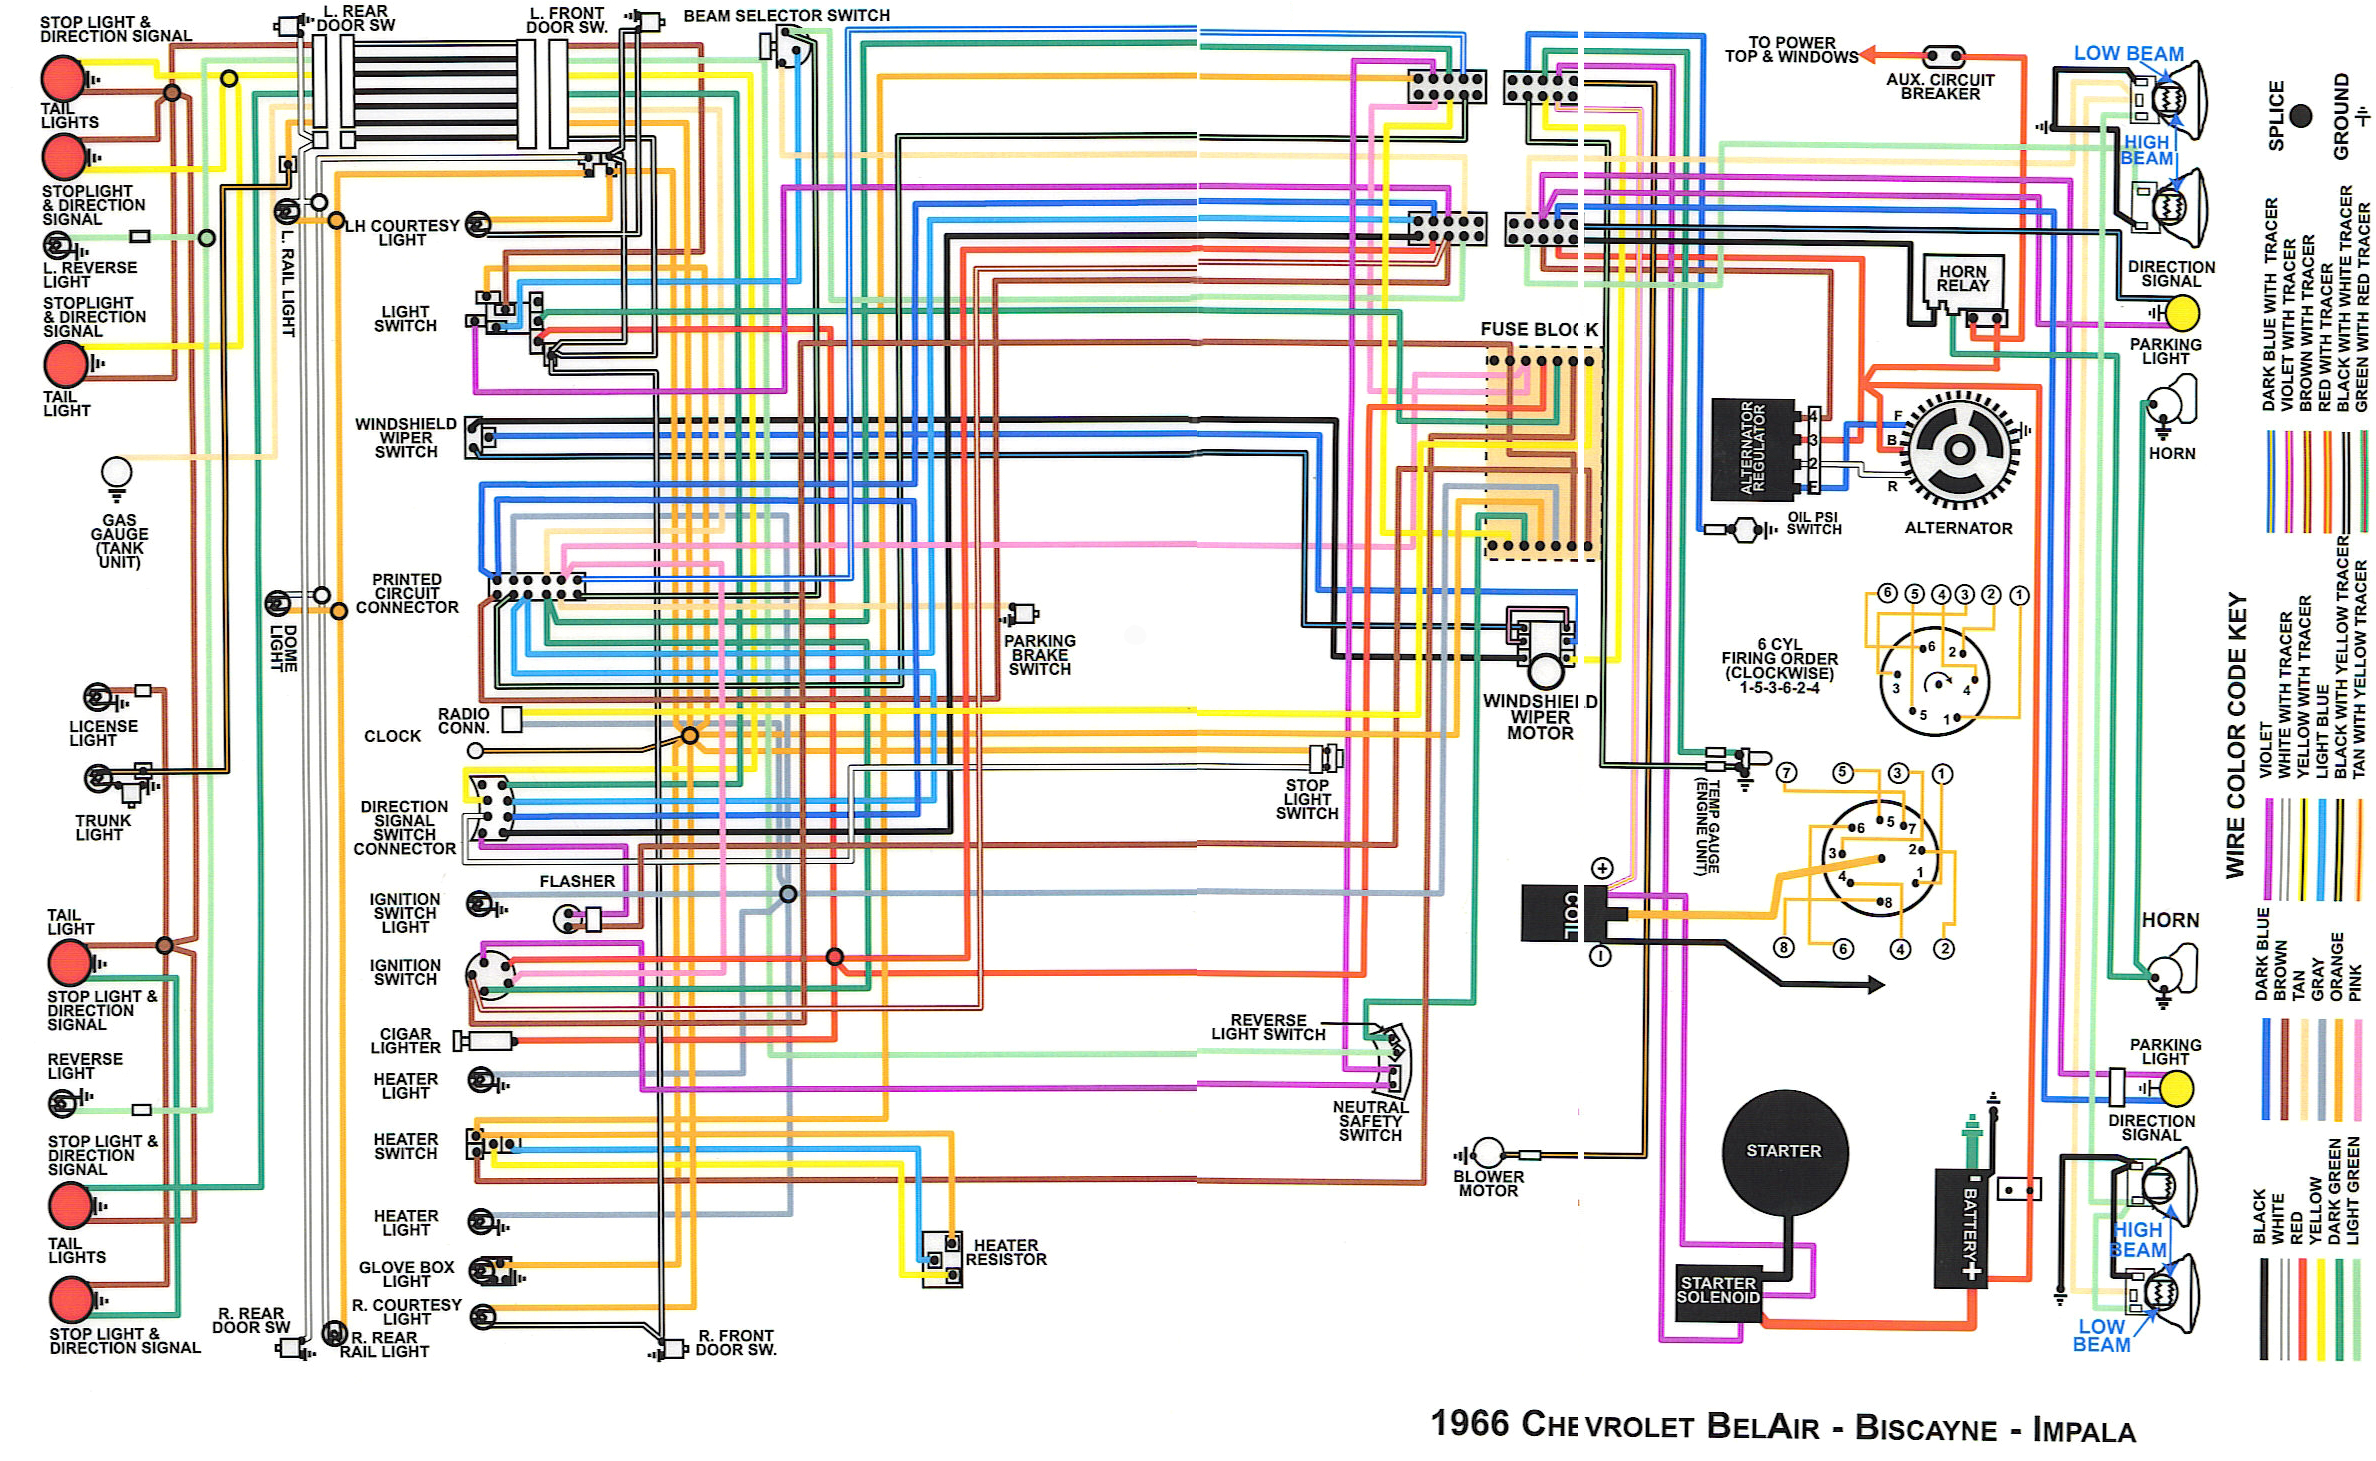 66 chevy impala wiring diagrams wiring diagram sys 1960 impala wiring diagram